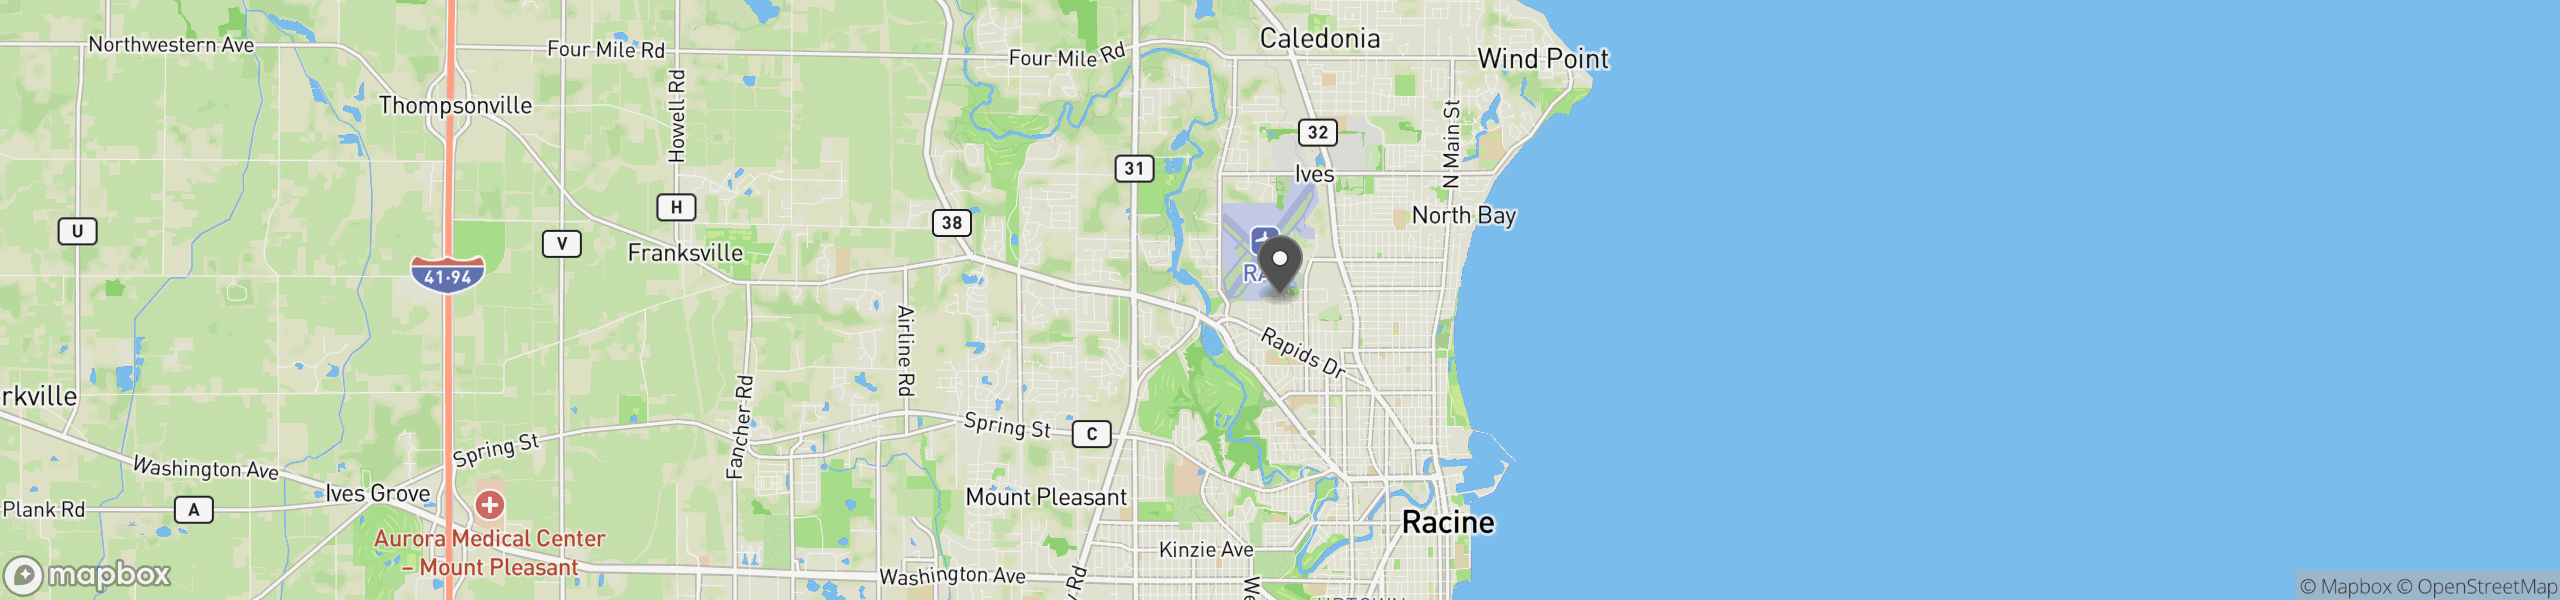 Racine, WI 53404